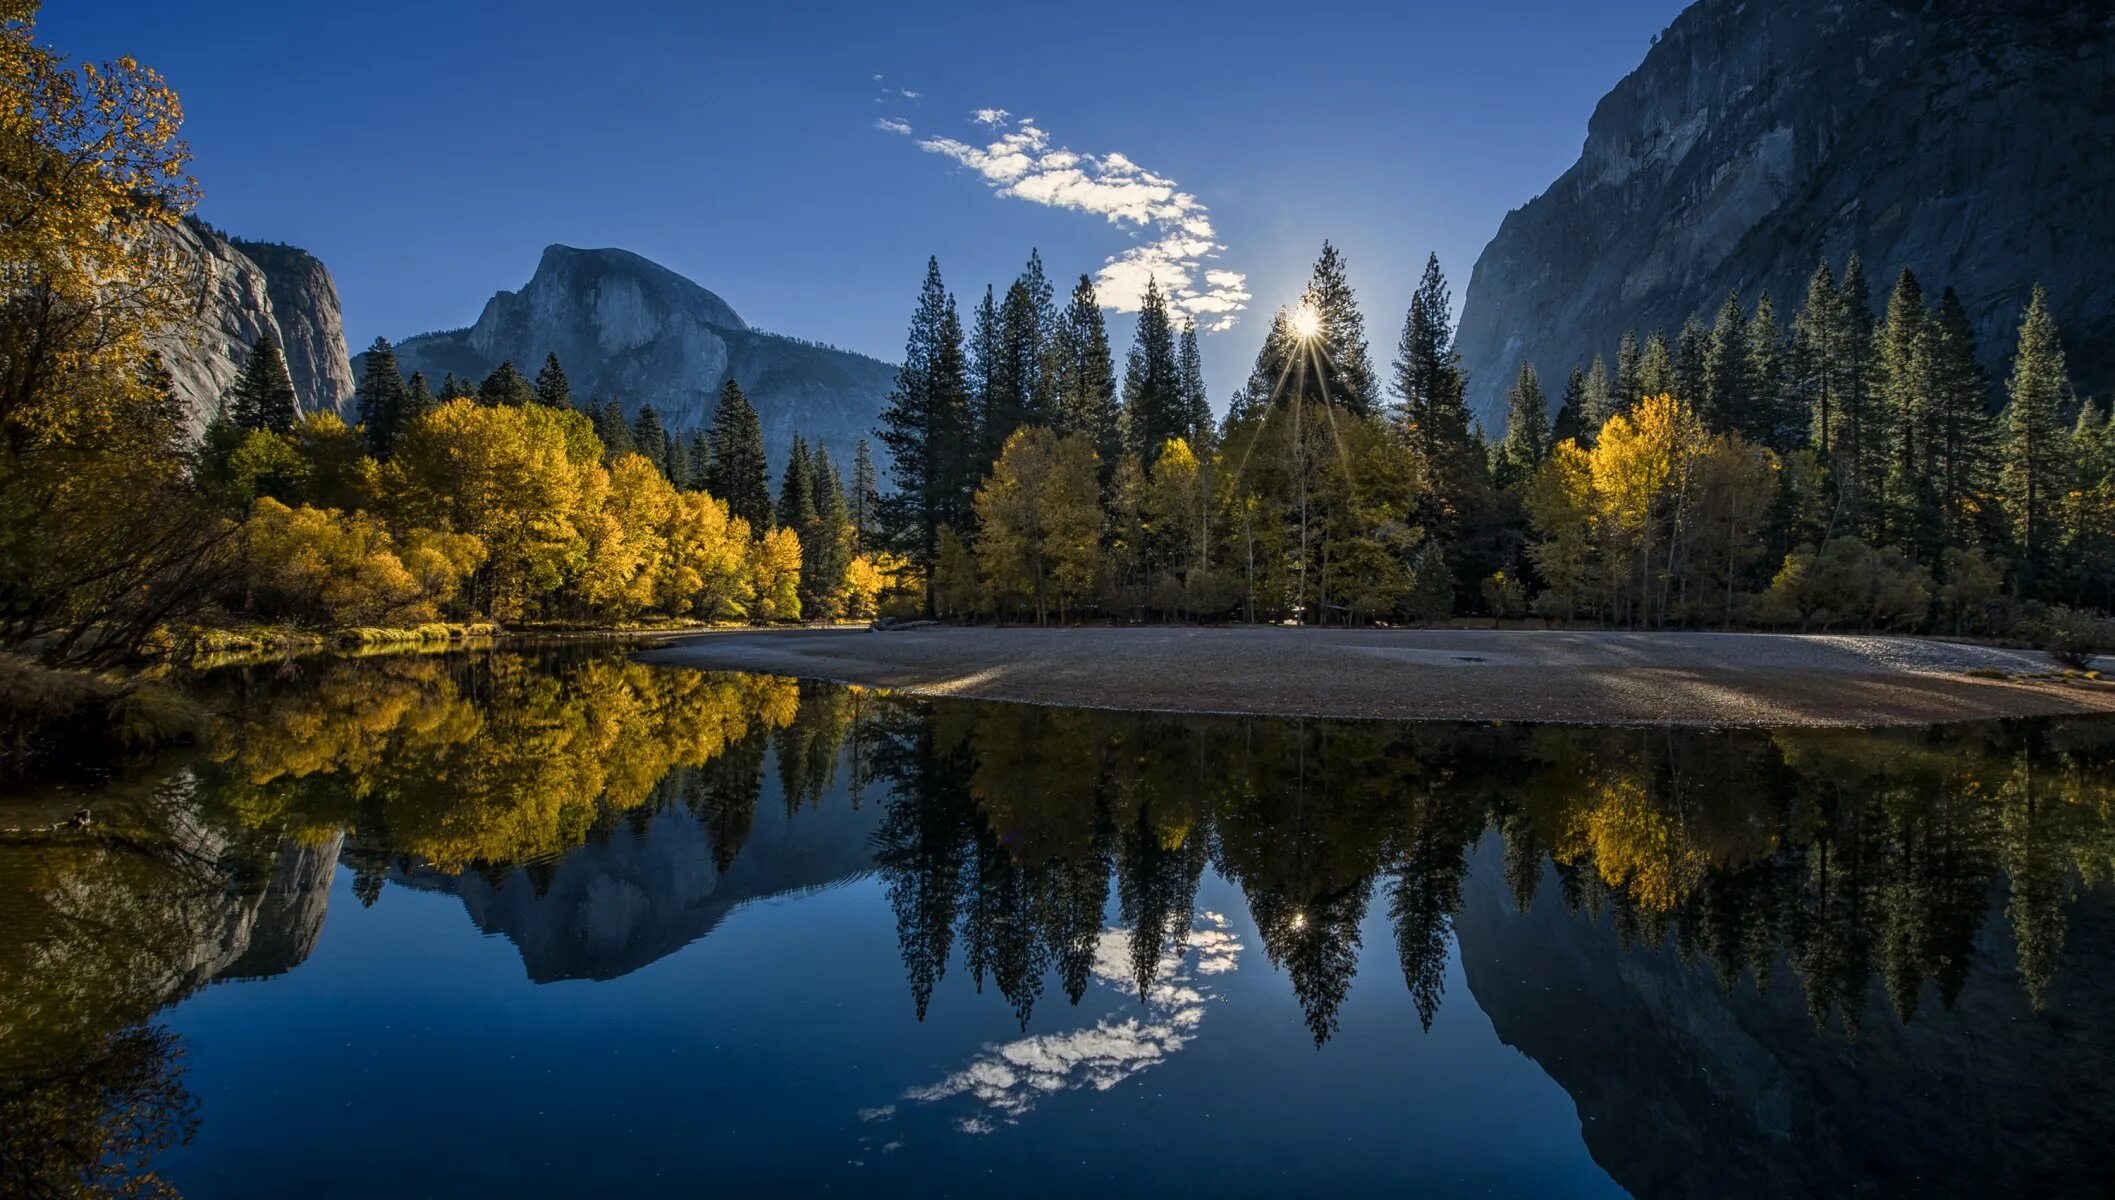 Картинки на обои. Национальный парк Йосемити Калифорния США. Йосемити национальный парк осенью. Йосемити парк озеро. Озеро Рица.